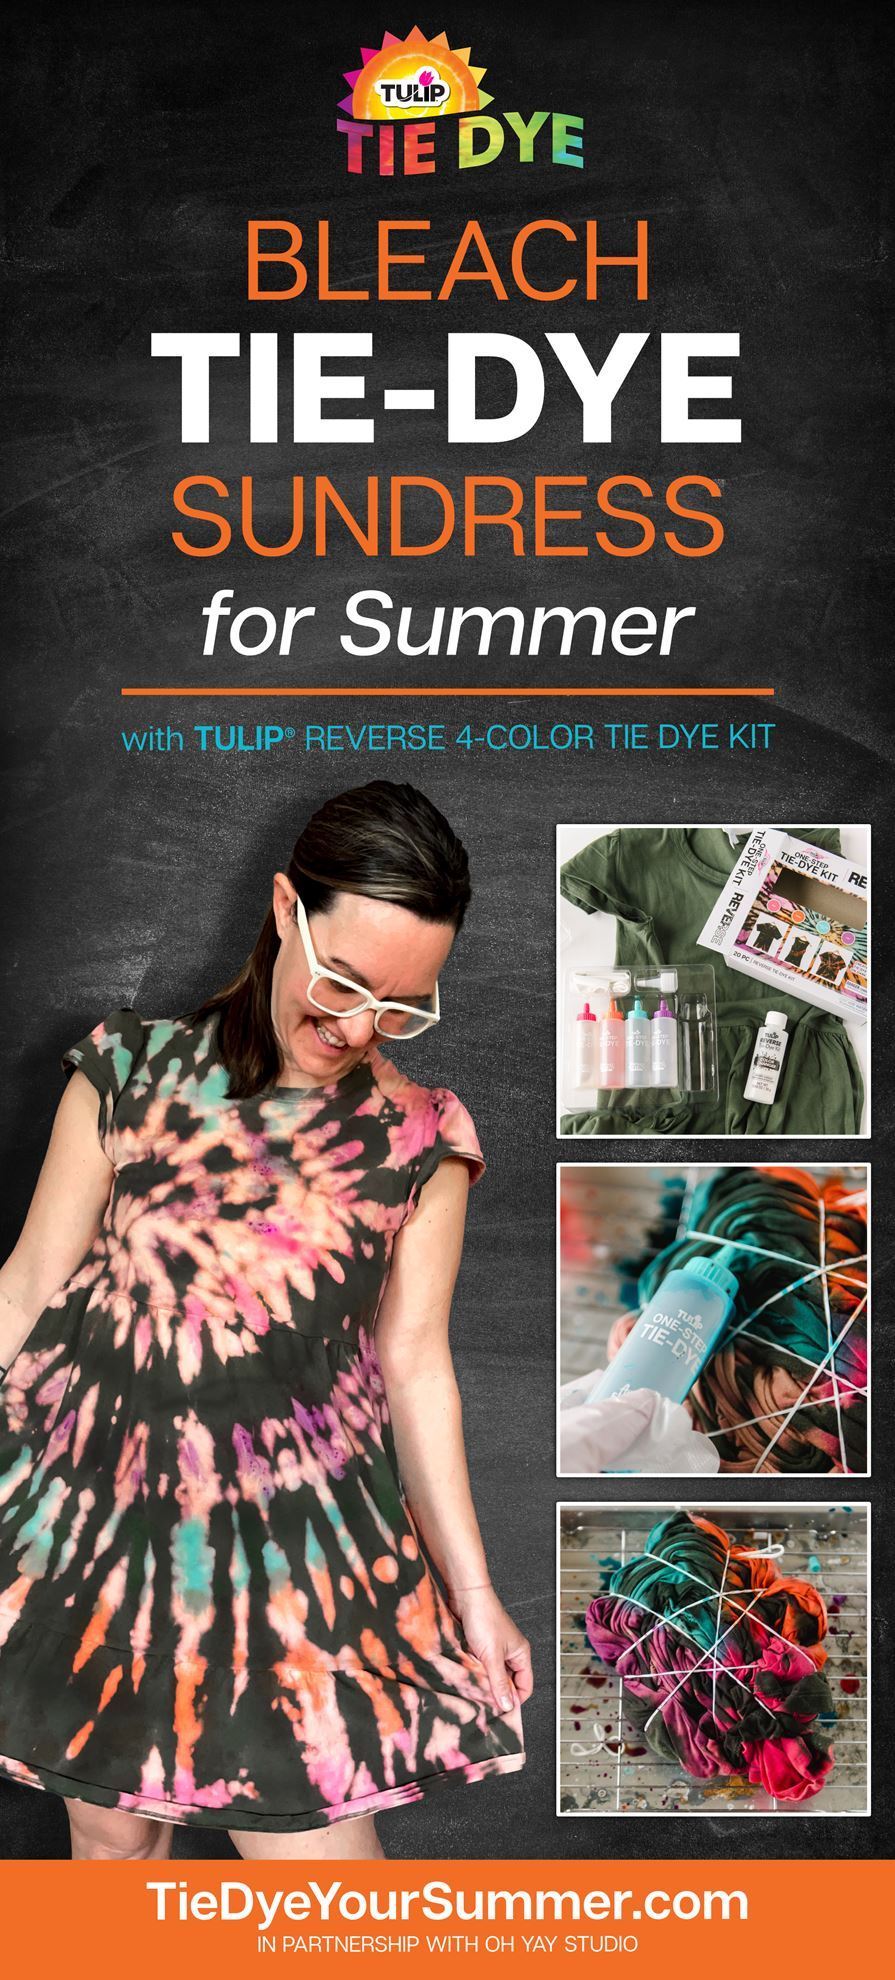 How to Bleach Tie-Dye a Sundress This Summer